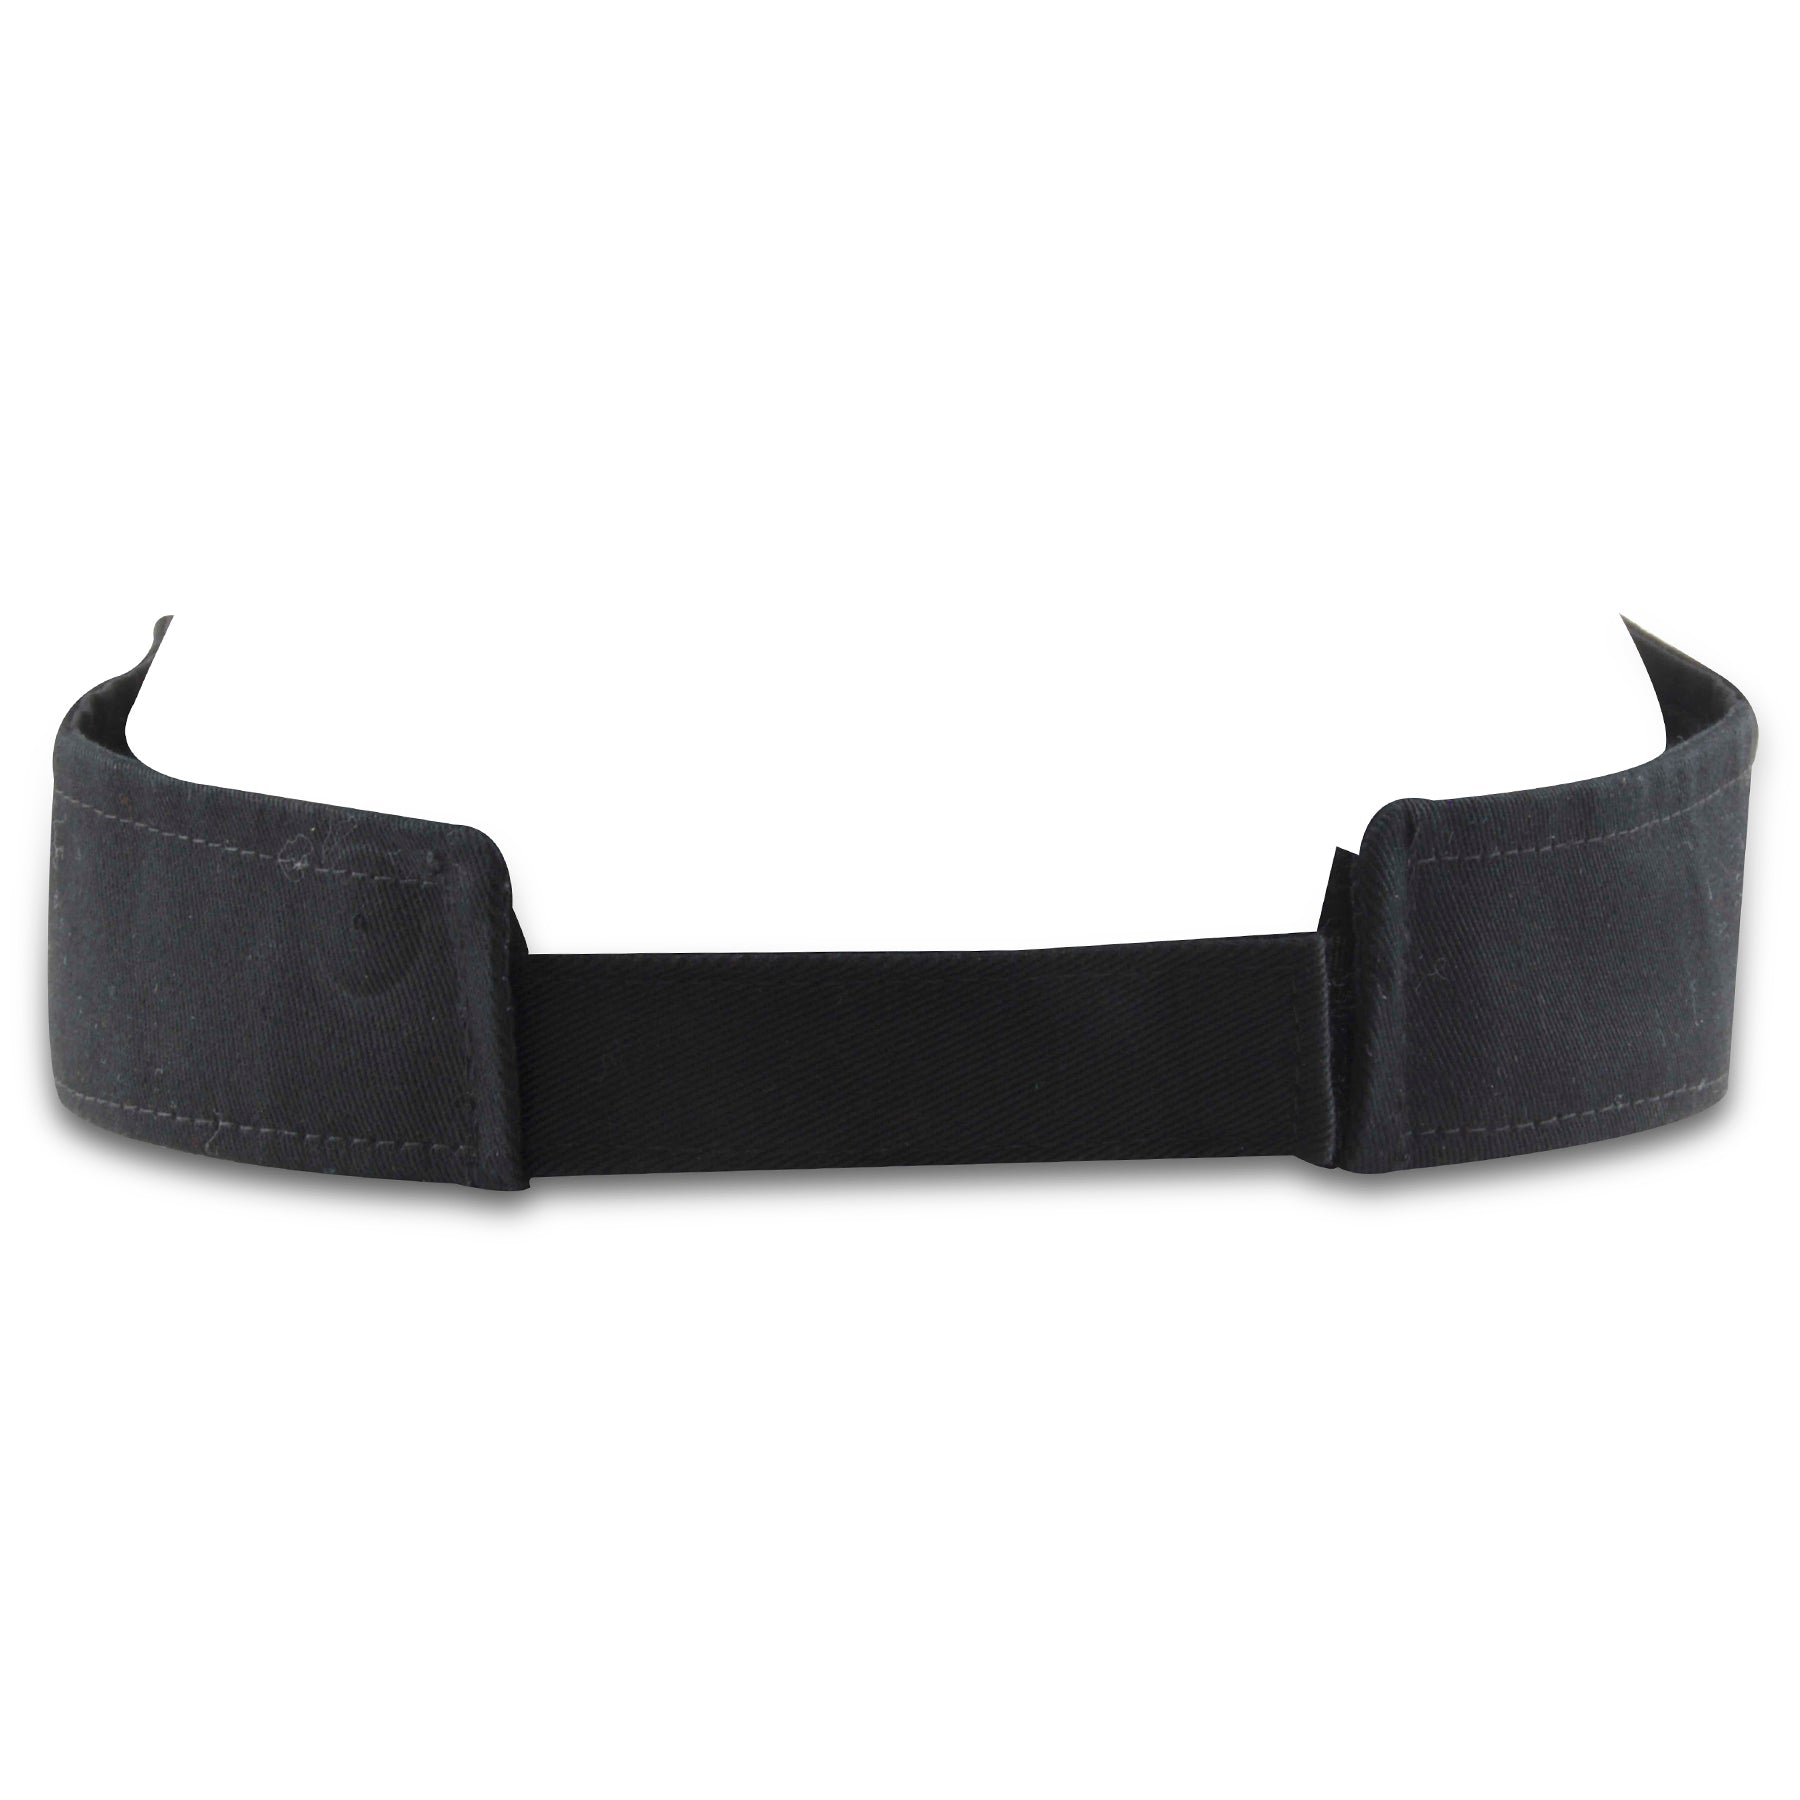 The adjustable blank black visor features a black adjustable velcro strap